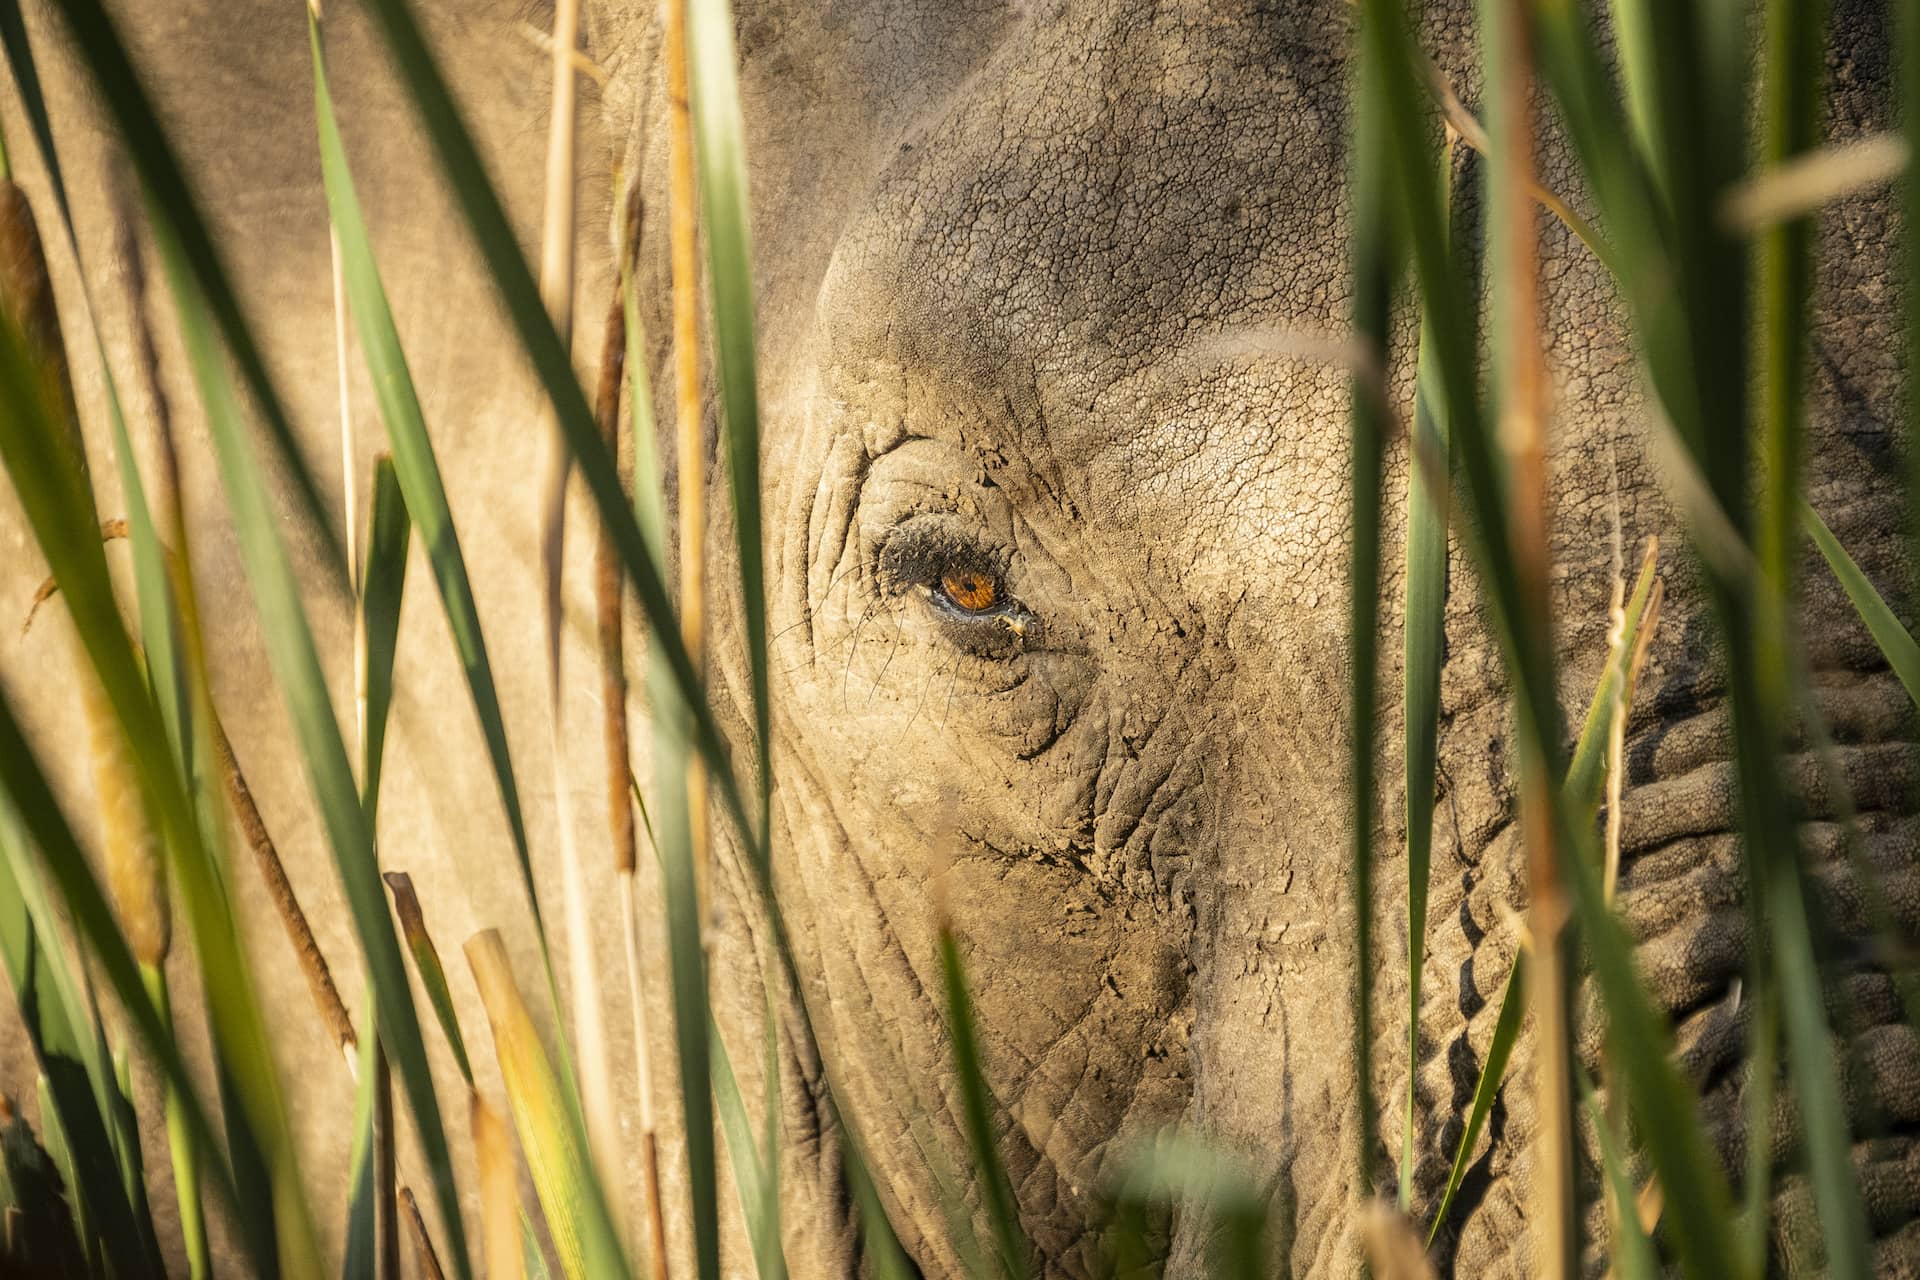 photo of an elephant eye through the reeds